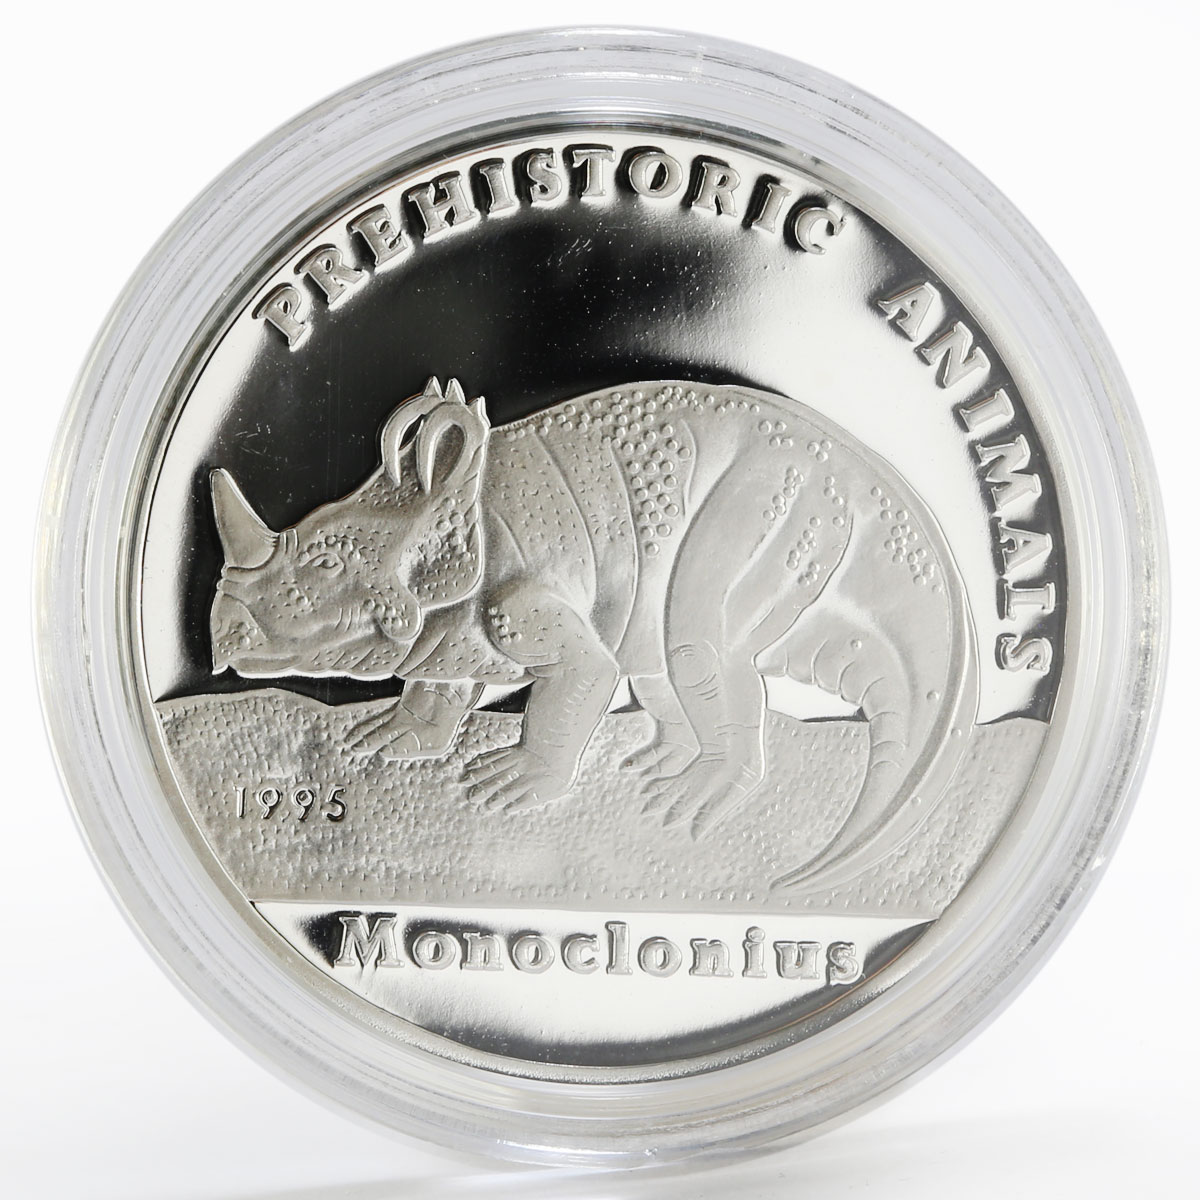 Cambodia 20 riels Prehistoric Animals series Monoclonius proof silver coin 1995